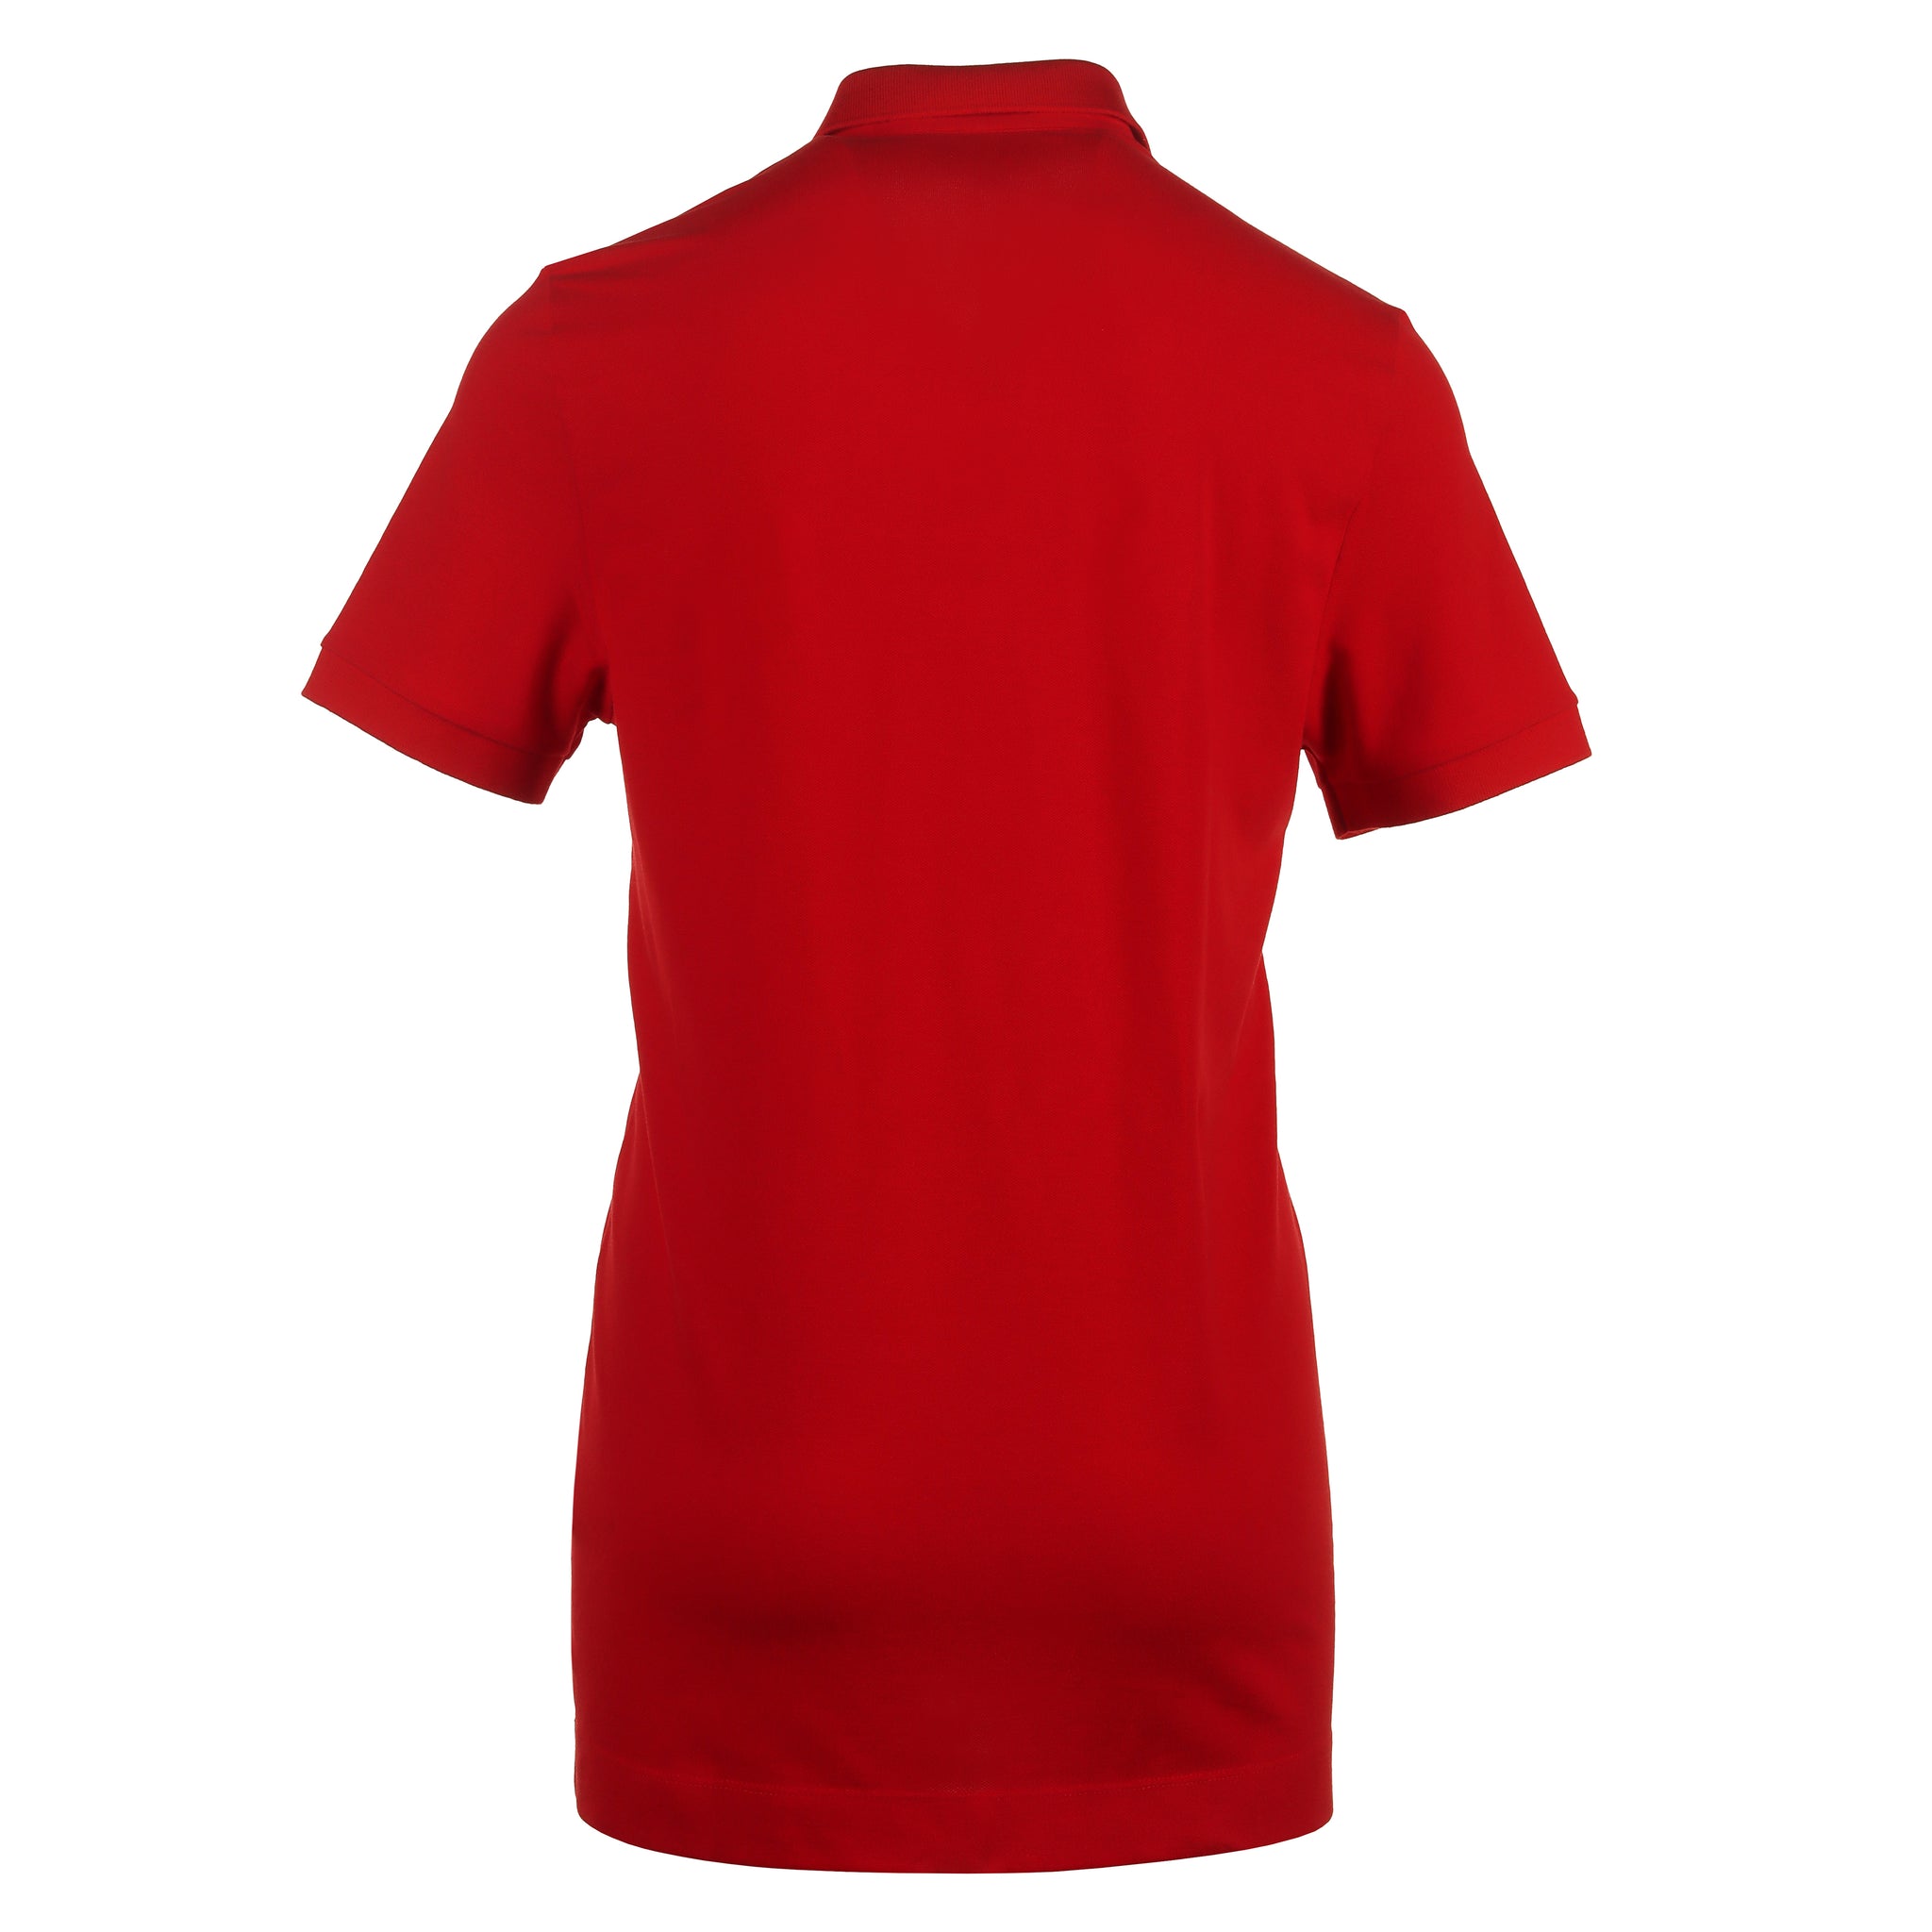 Lacoste Paris Pique Polo Shirt PH5522 Red 240 | Function18 | Restrictedgs